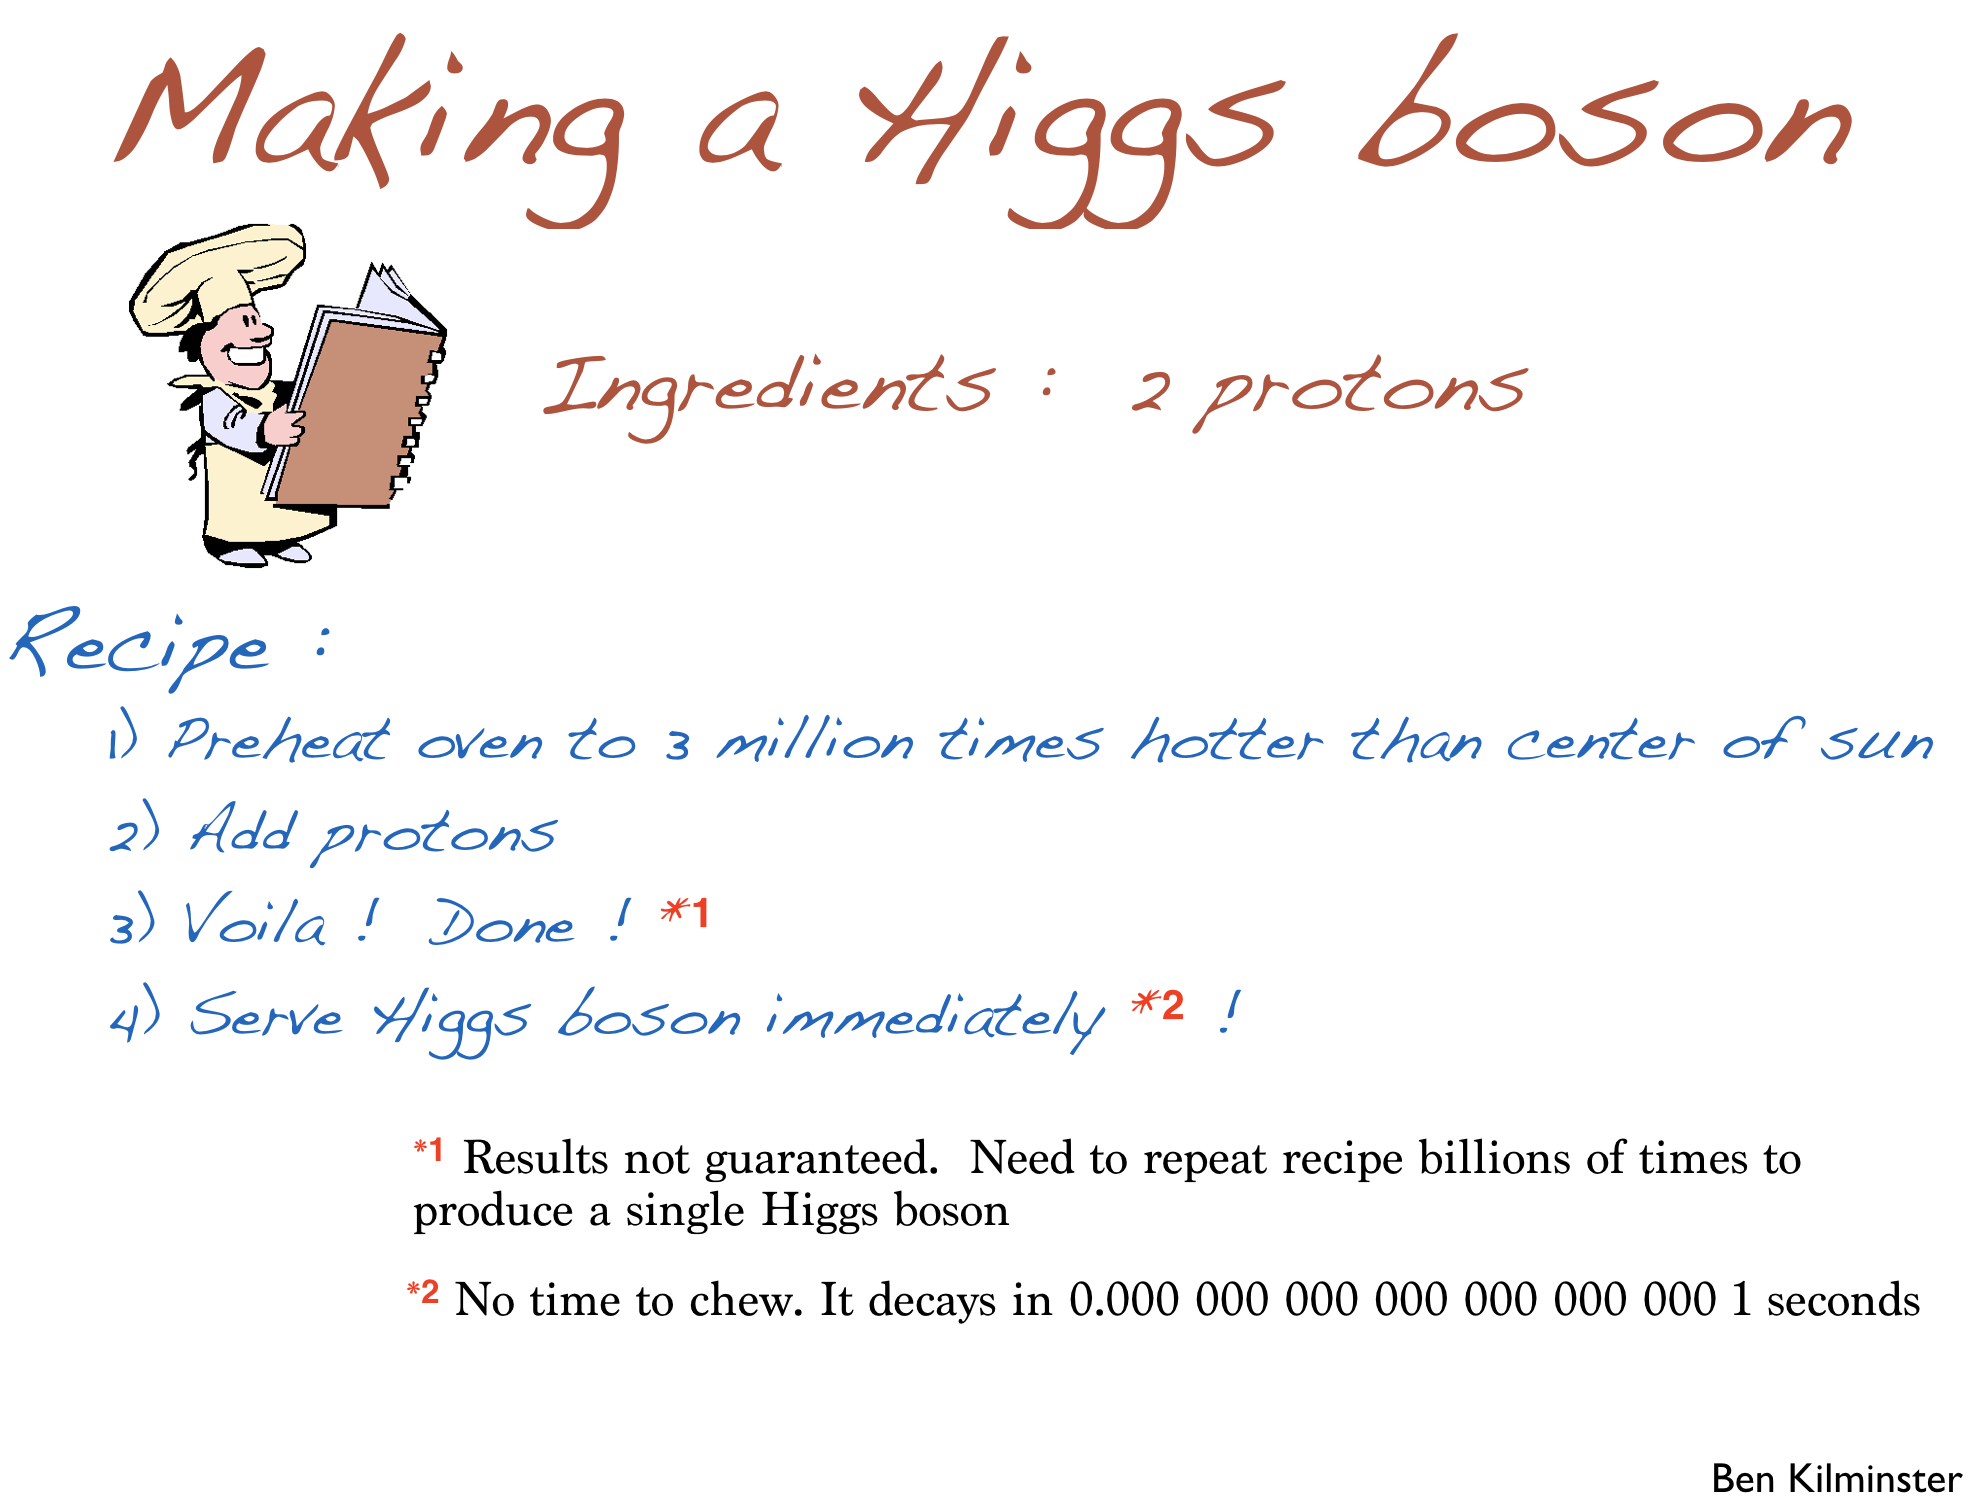 Making a Higgs boson